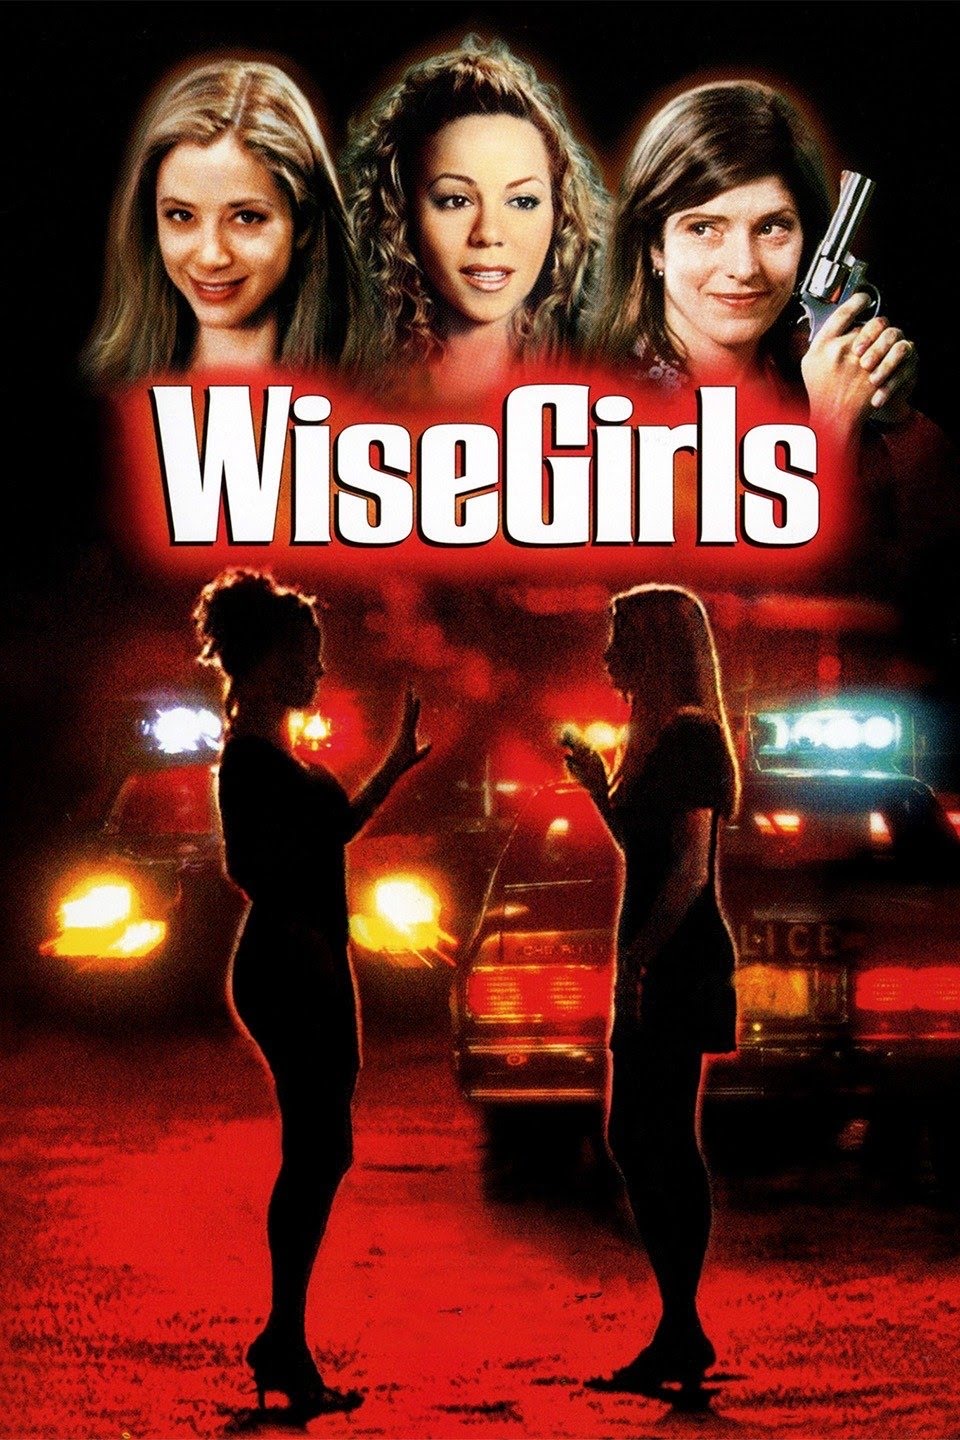 WiseGirls (2002) with English Subtitles on DVD on DVD